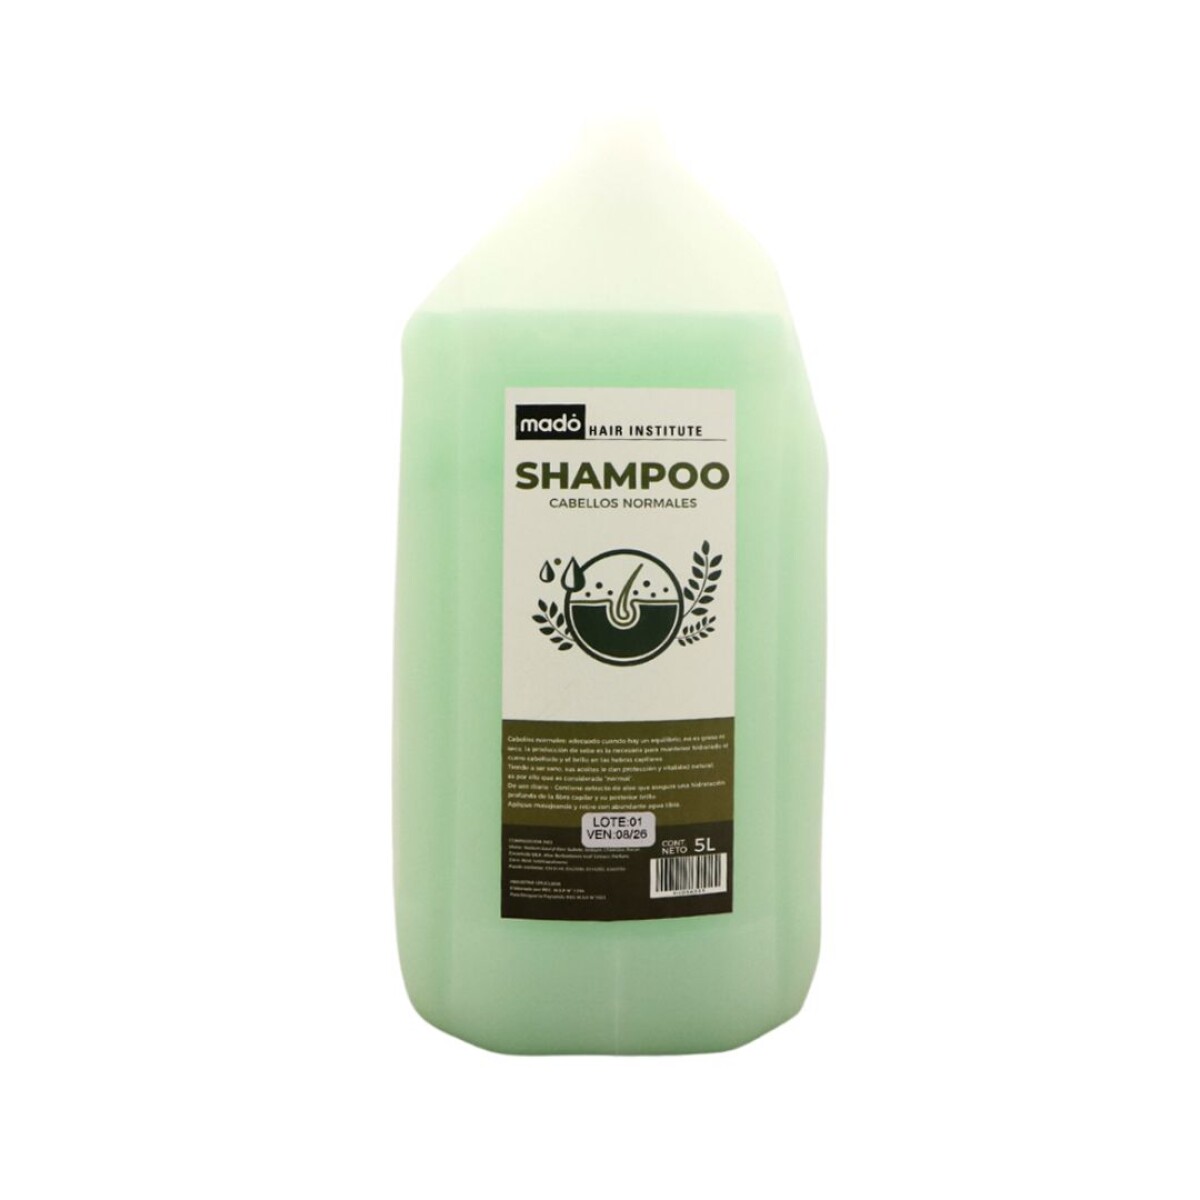 Shampoo MADO - Cabellos Normales - 5 L 